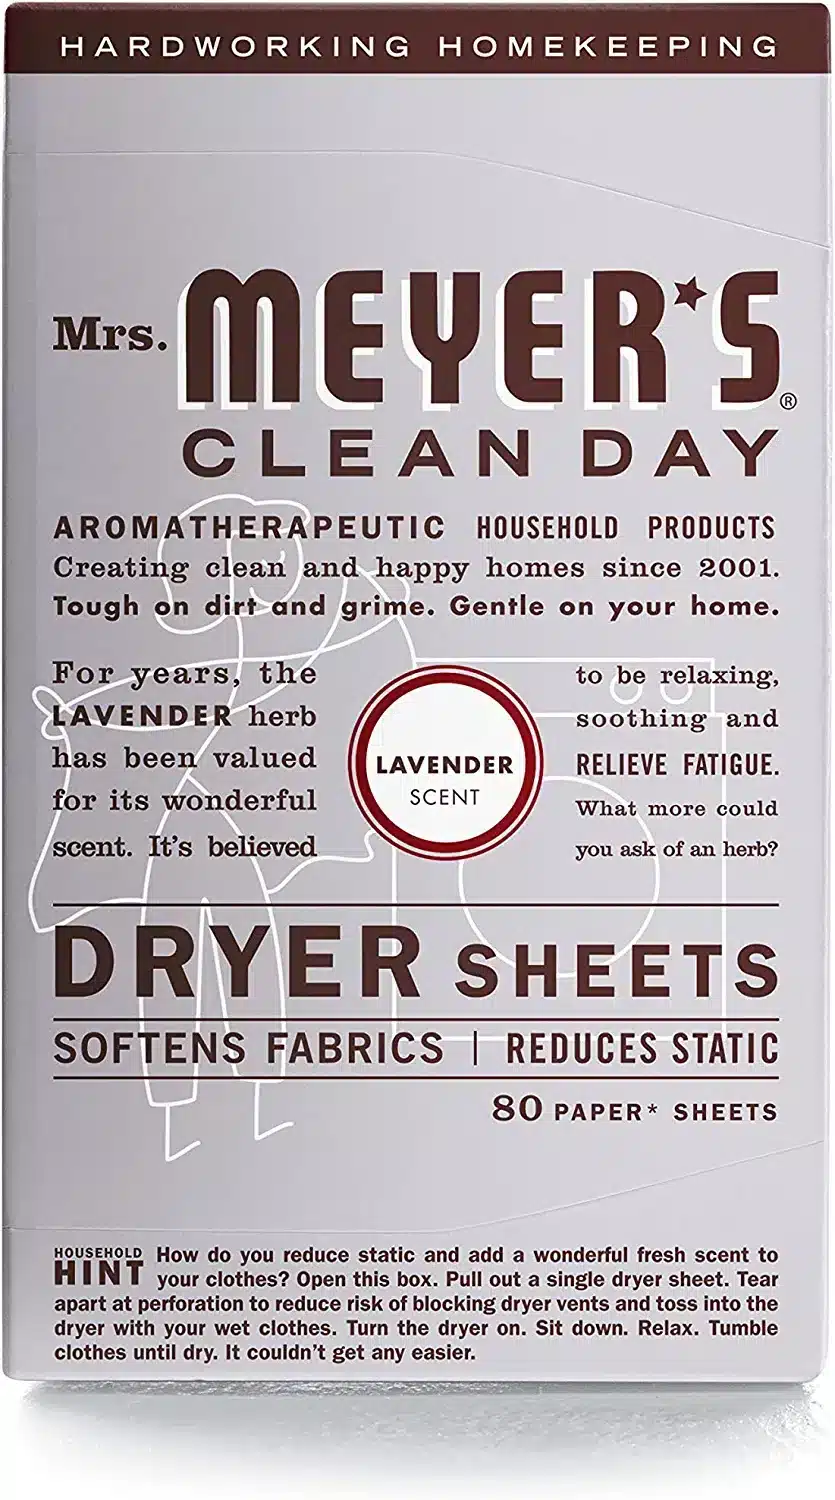 Mrs. Myer’s Dryer Sheets